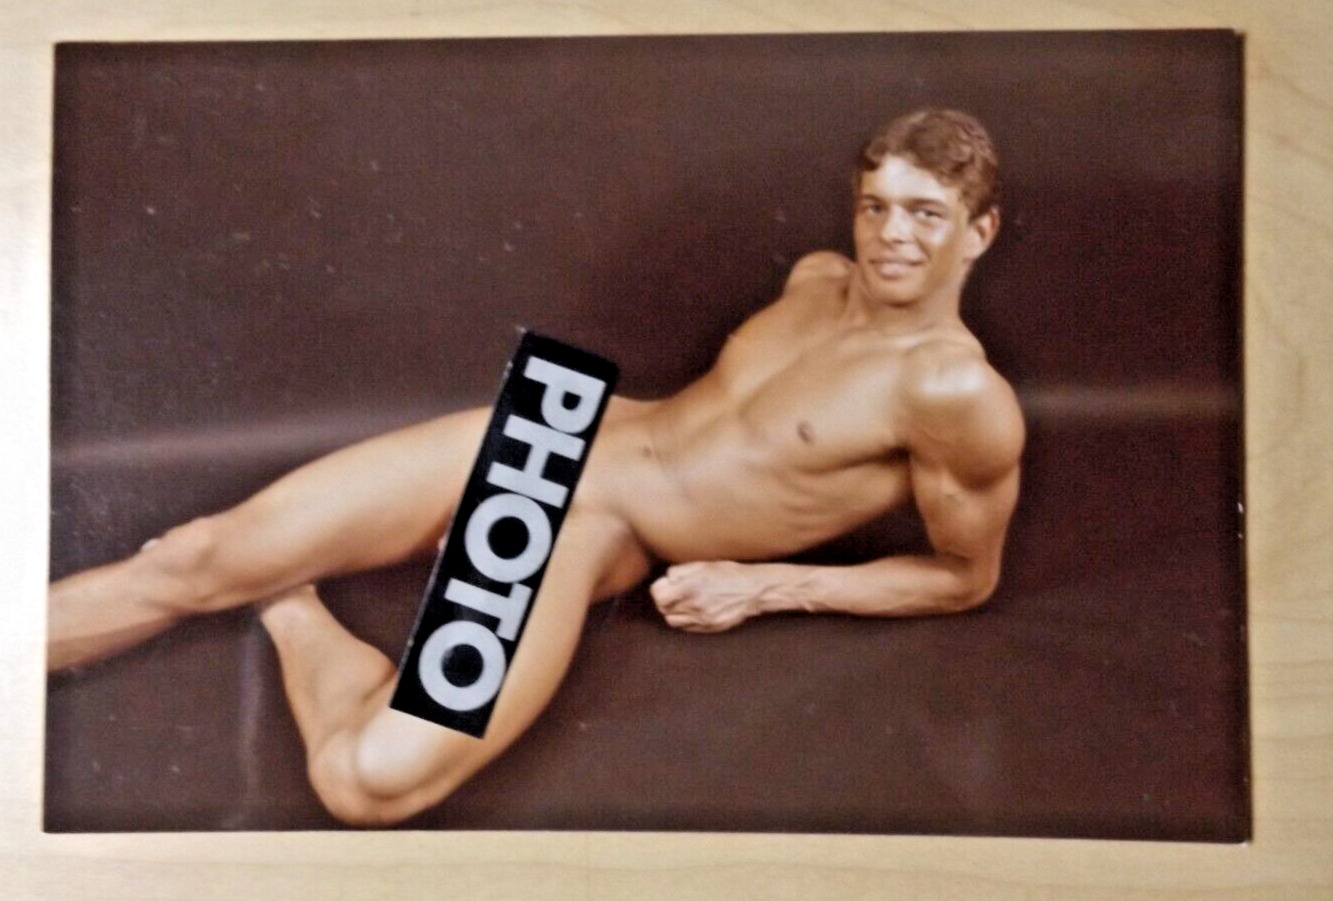 Cir 1970s Classic Beefcake Male Nude Mature Snapshot Photo Art Gay Interest 6x4